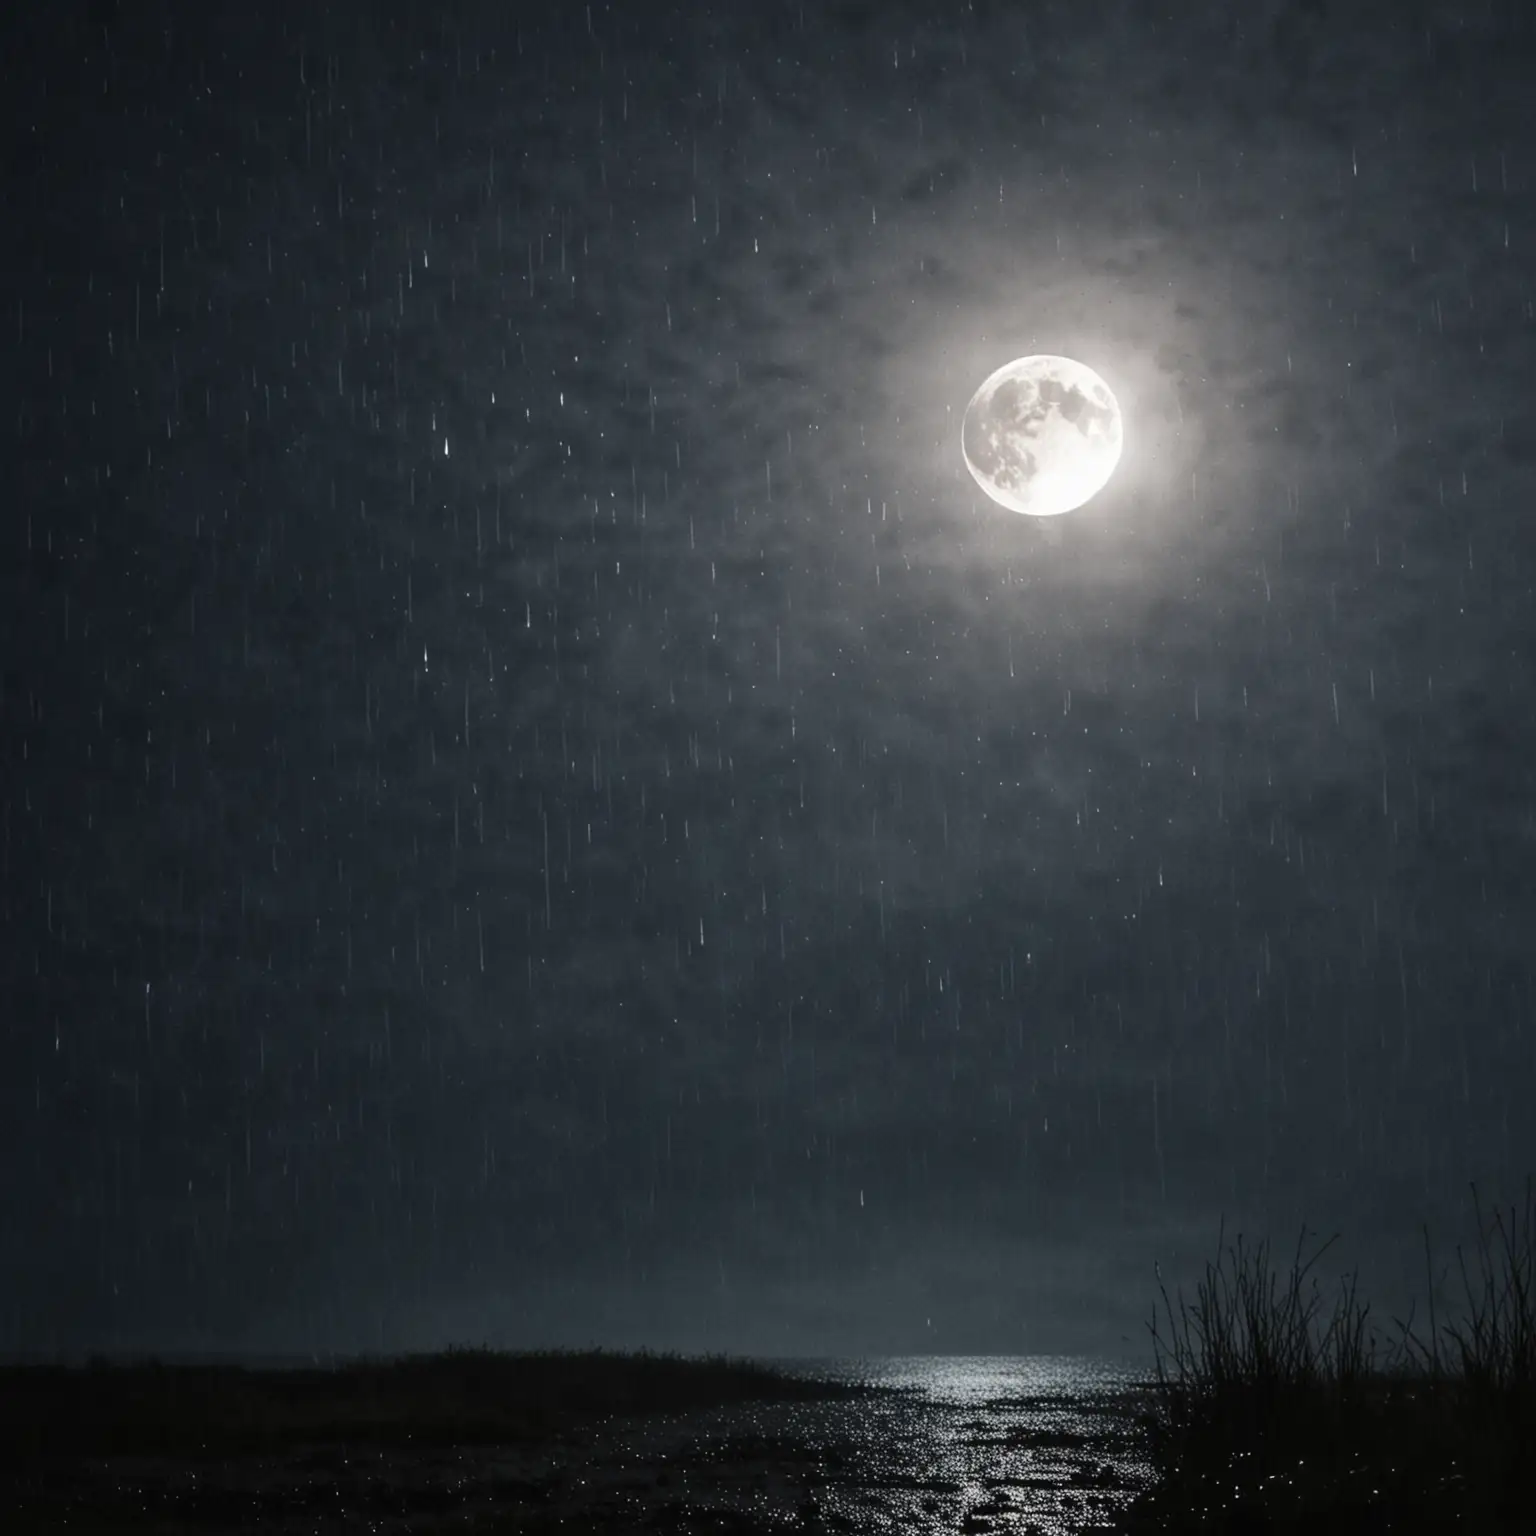 Moonlit Rainy Night Scene Tranquil Rain with Illuminated Moon